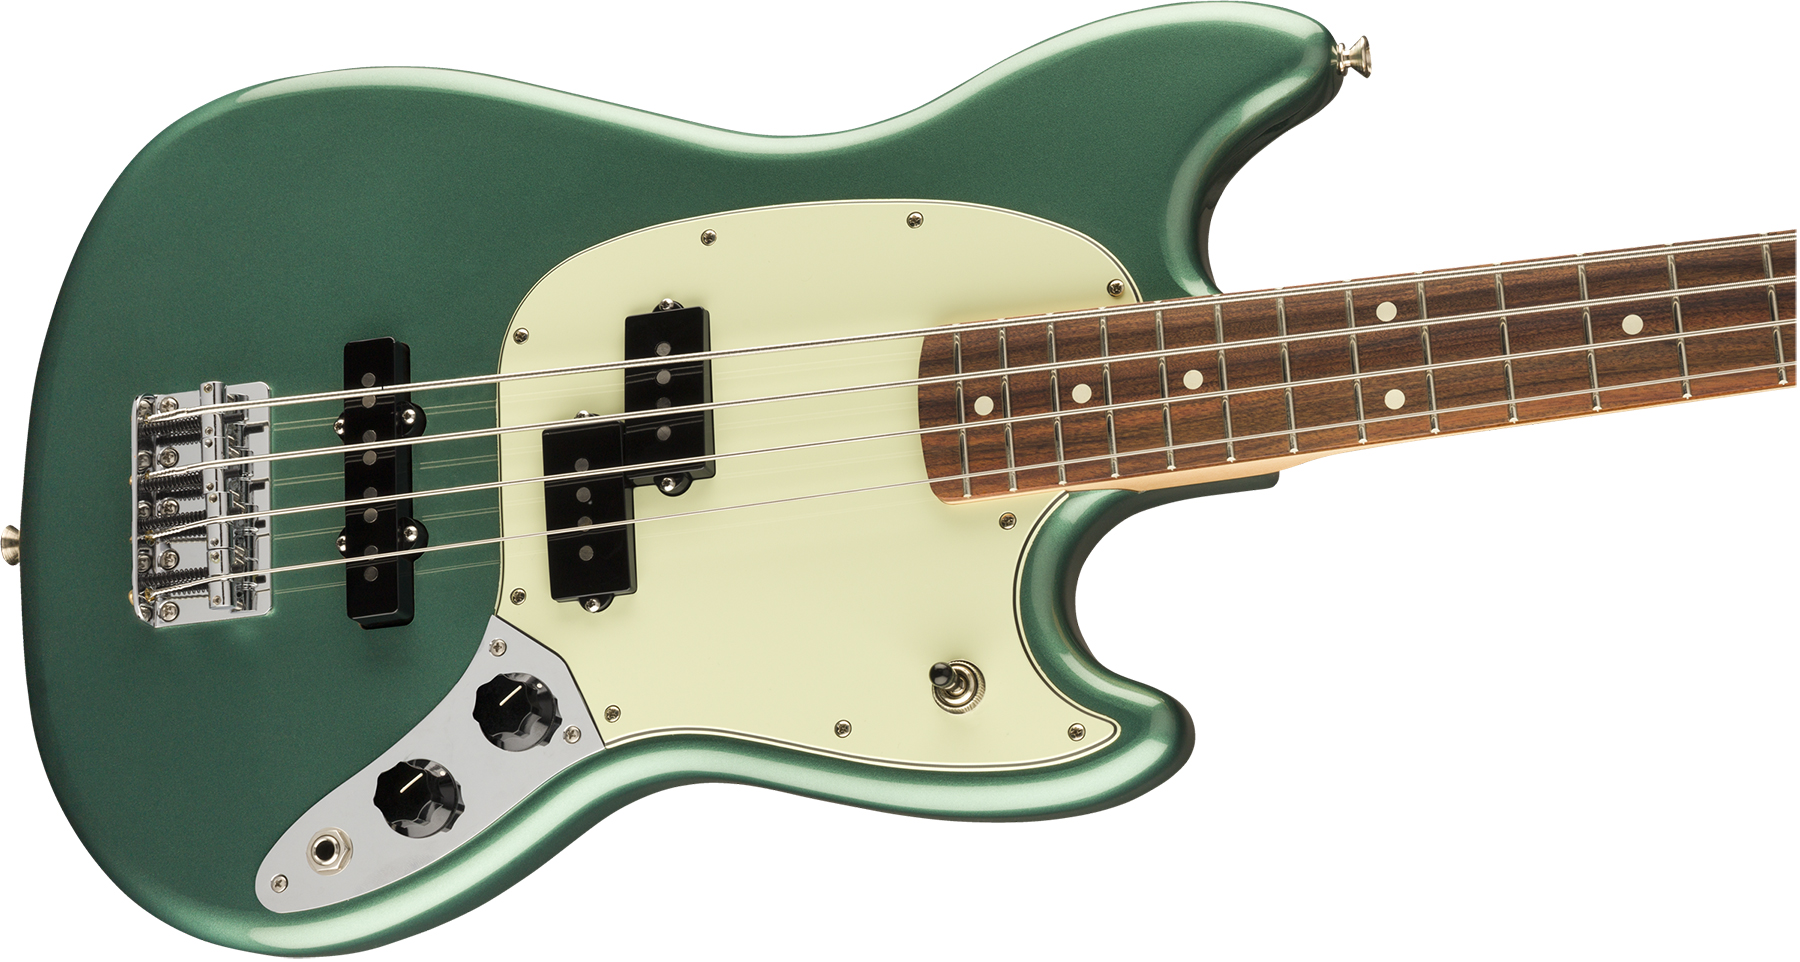 Fender Mustang Bass Pj Player Ltd Mex Pf - Sherwood Green Metallic - Basse Électrique Enfants - Variation 2